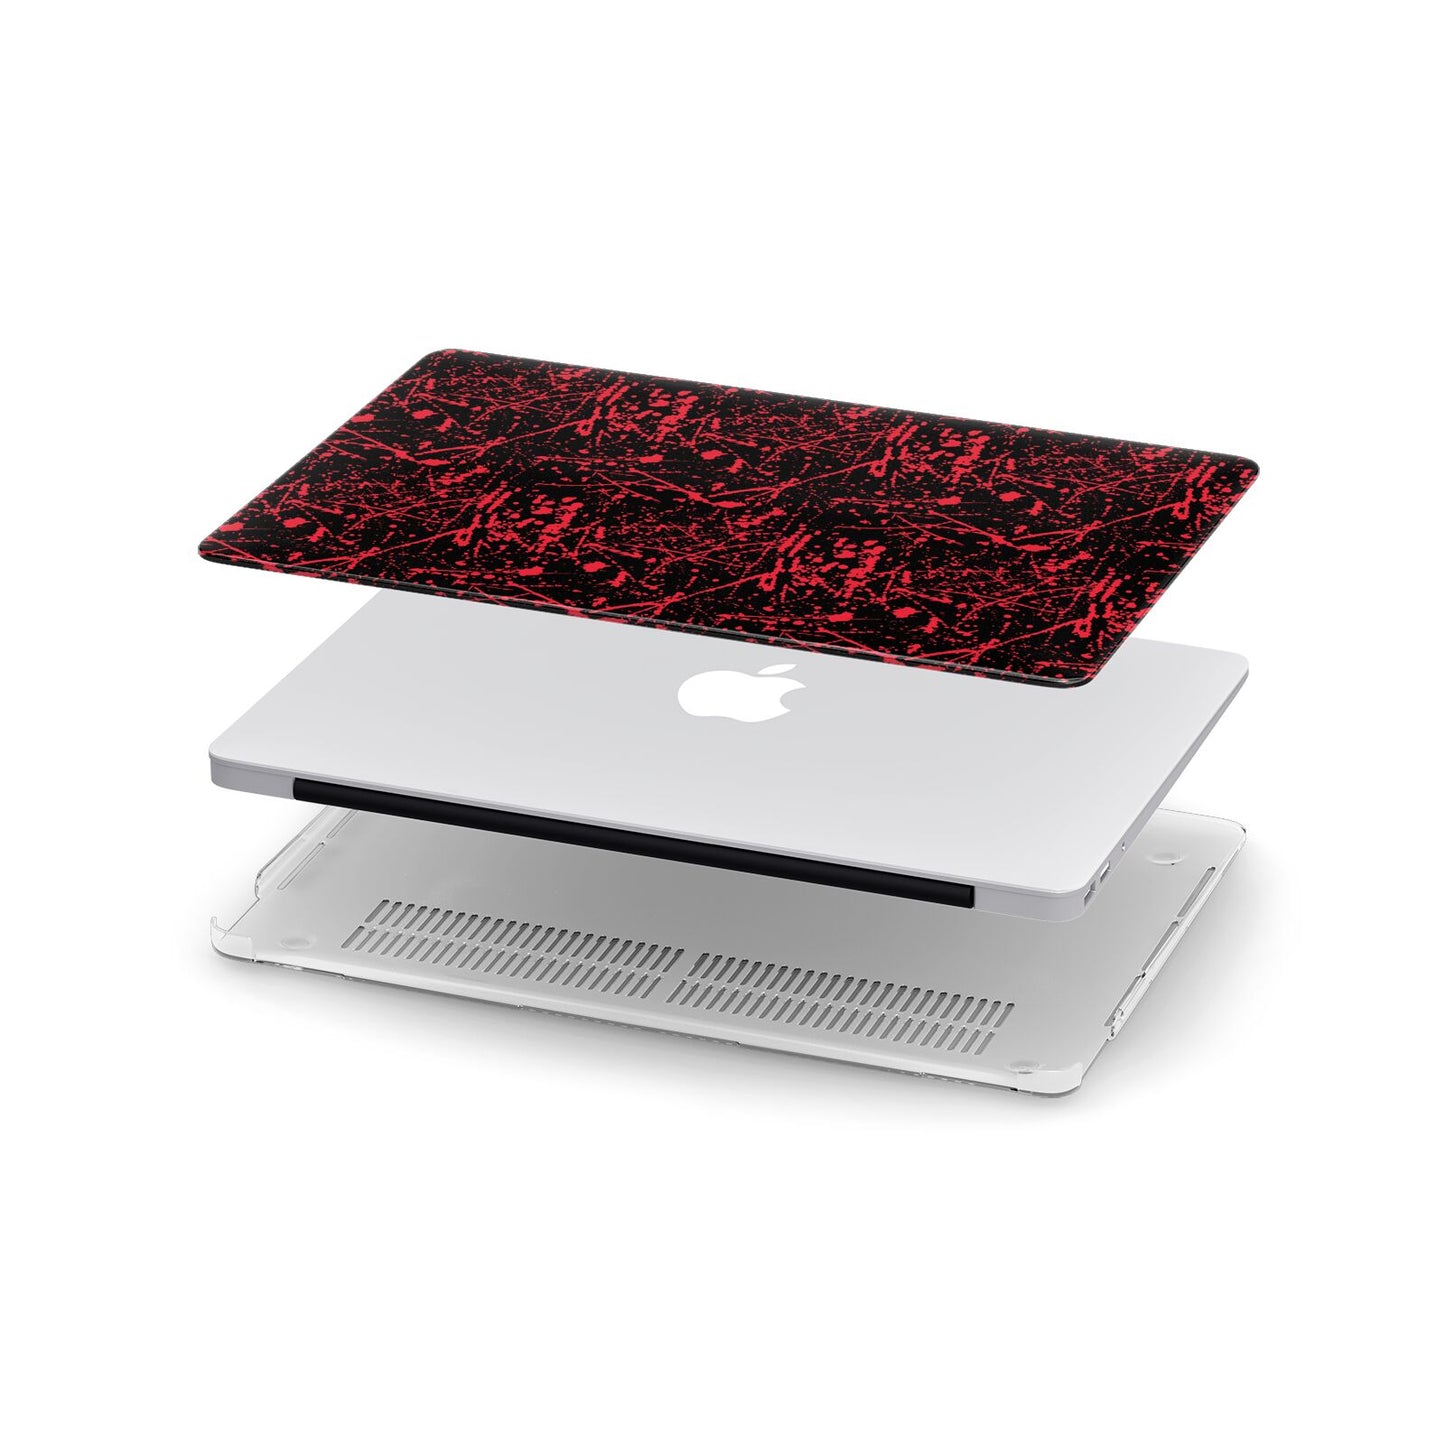 Blood Splatters Apple MacBook Case in Detail